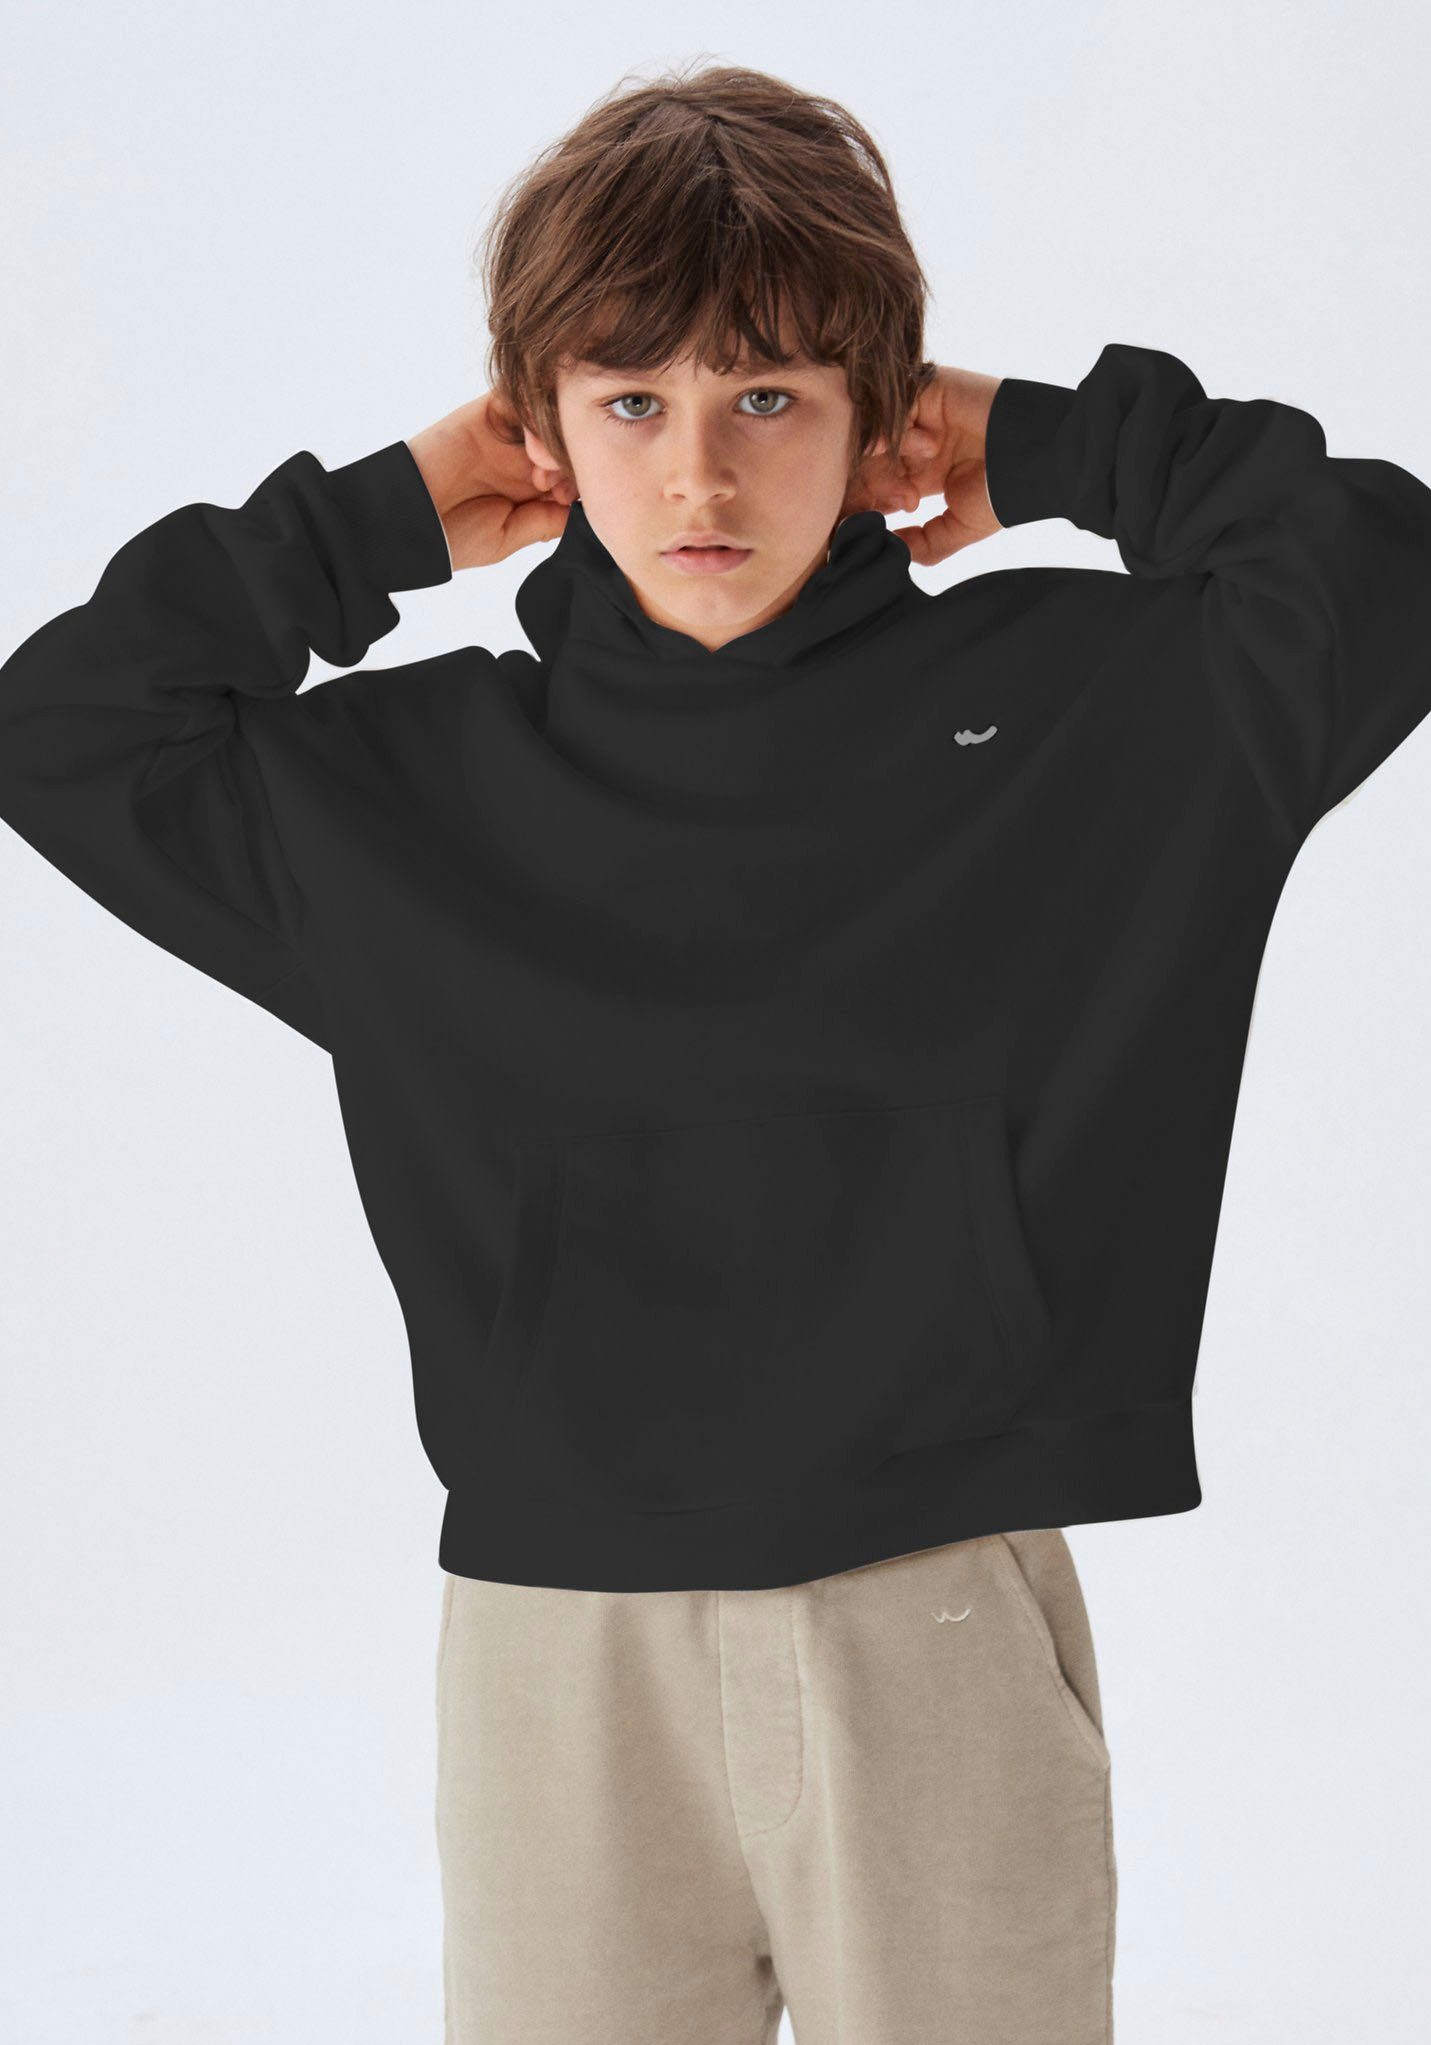 TOHOCO black Sweatshirt LTB